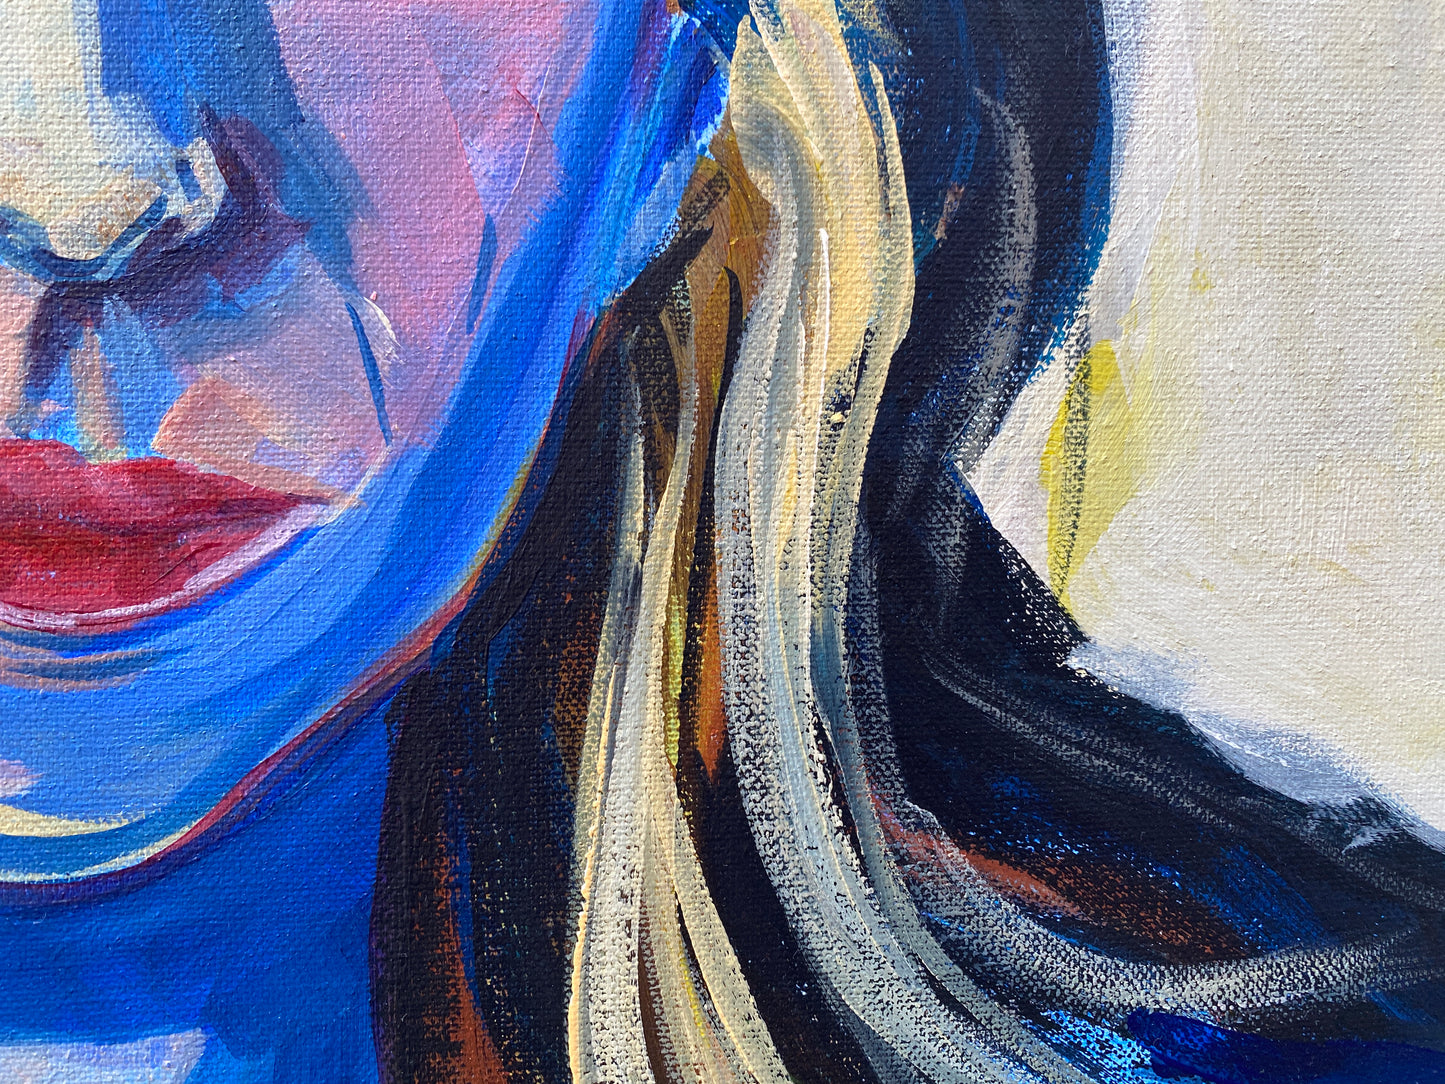 Acrylic on Canvas - Contemporary Artwork 'Kate feeling Blue' Artist AH